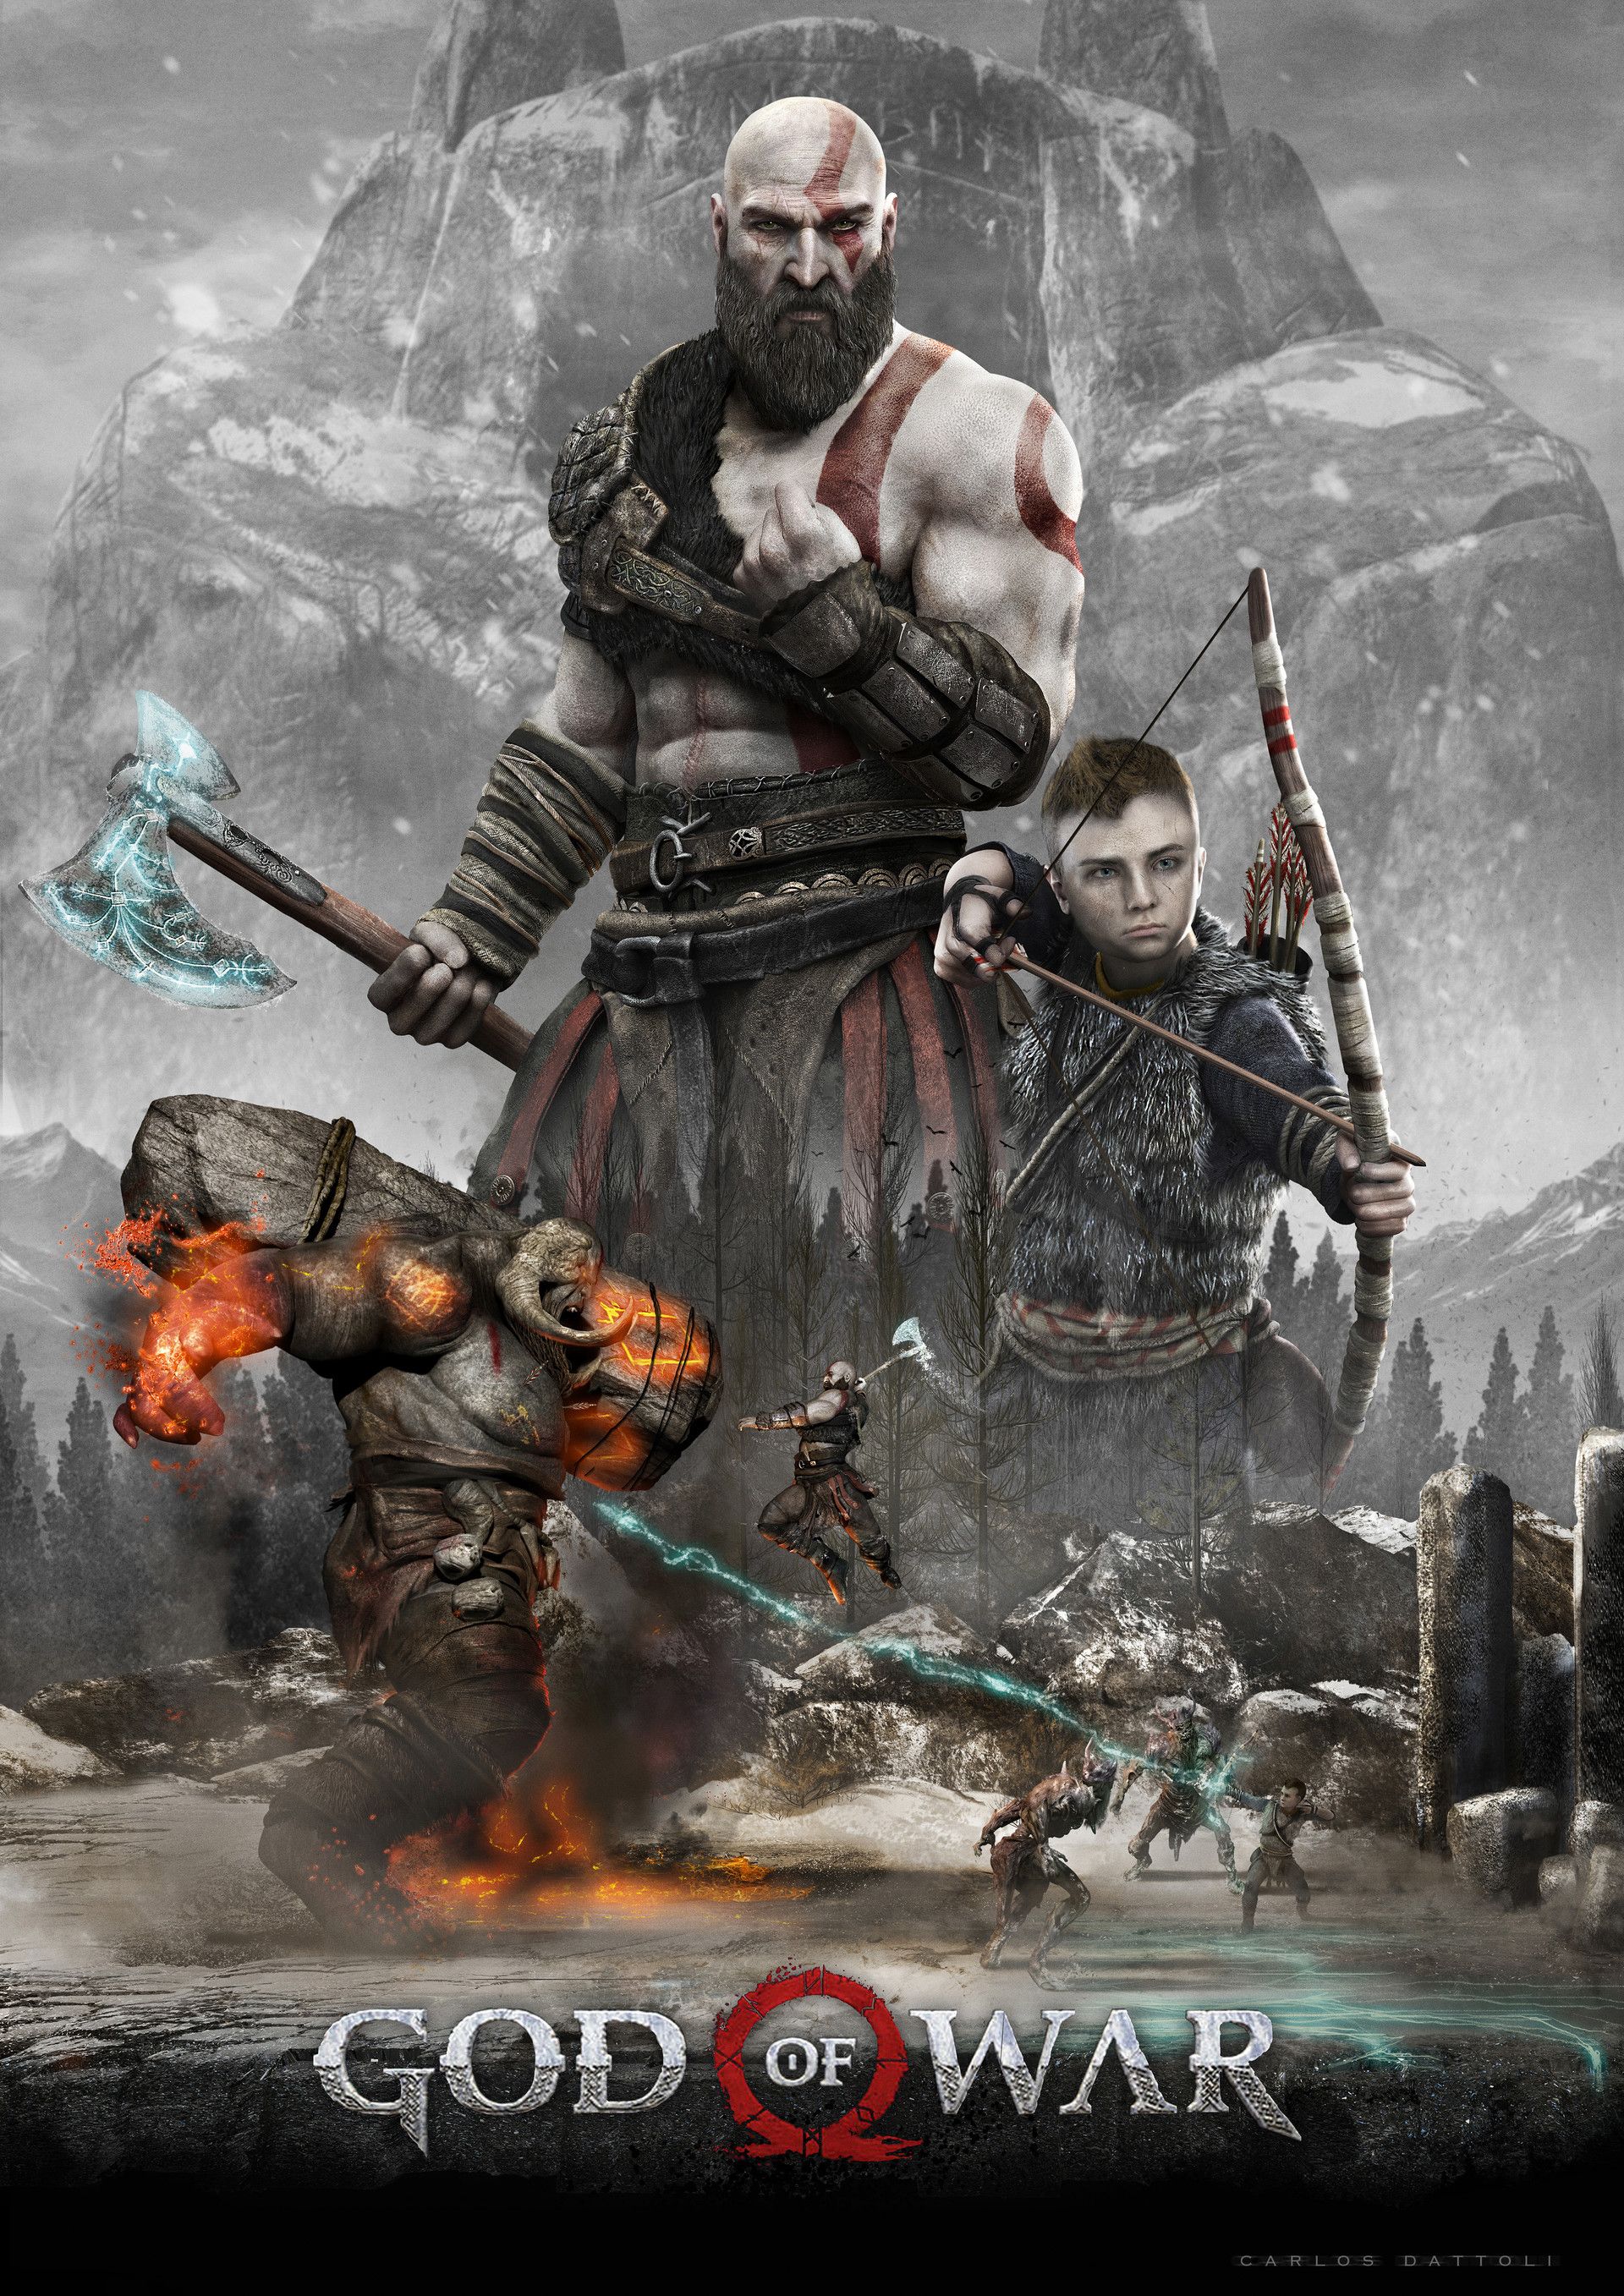 God of War 4 Poster Wallpaper: Kratos in Combat